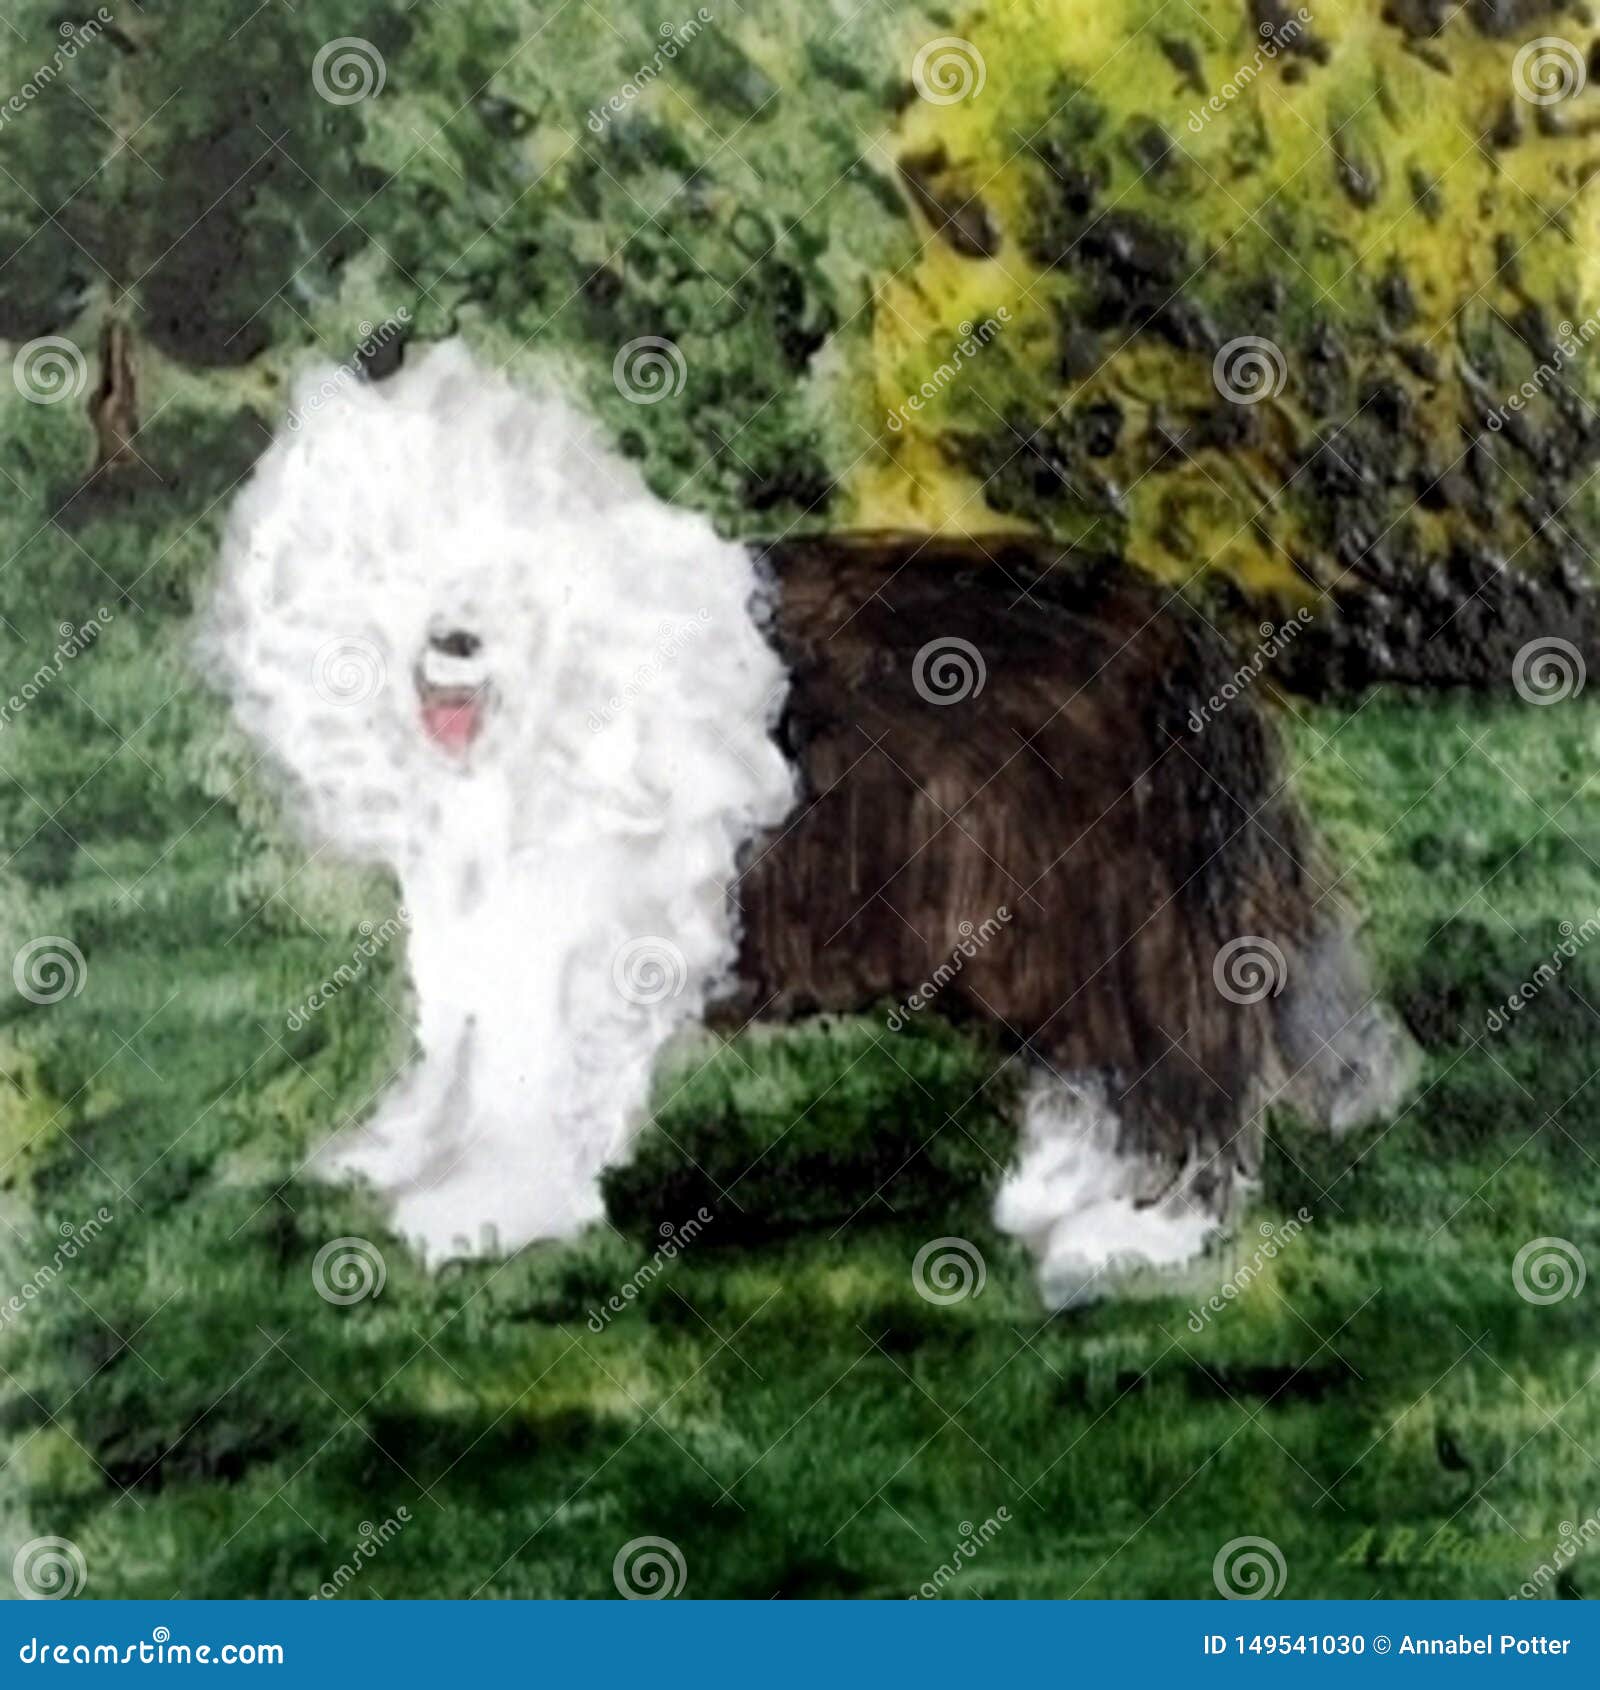 Old English Sheepdog Painting In A Garden Stock Illustration Illustration Of Sheepdog Original 149541030